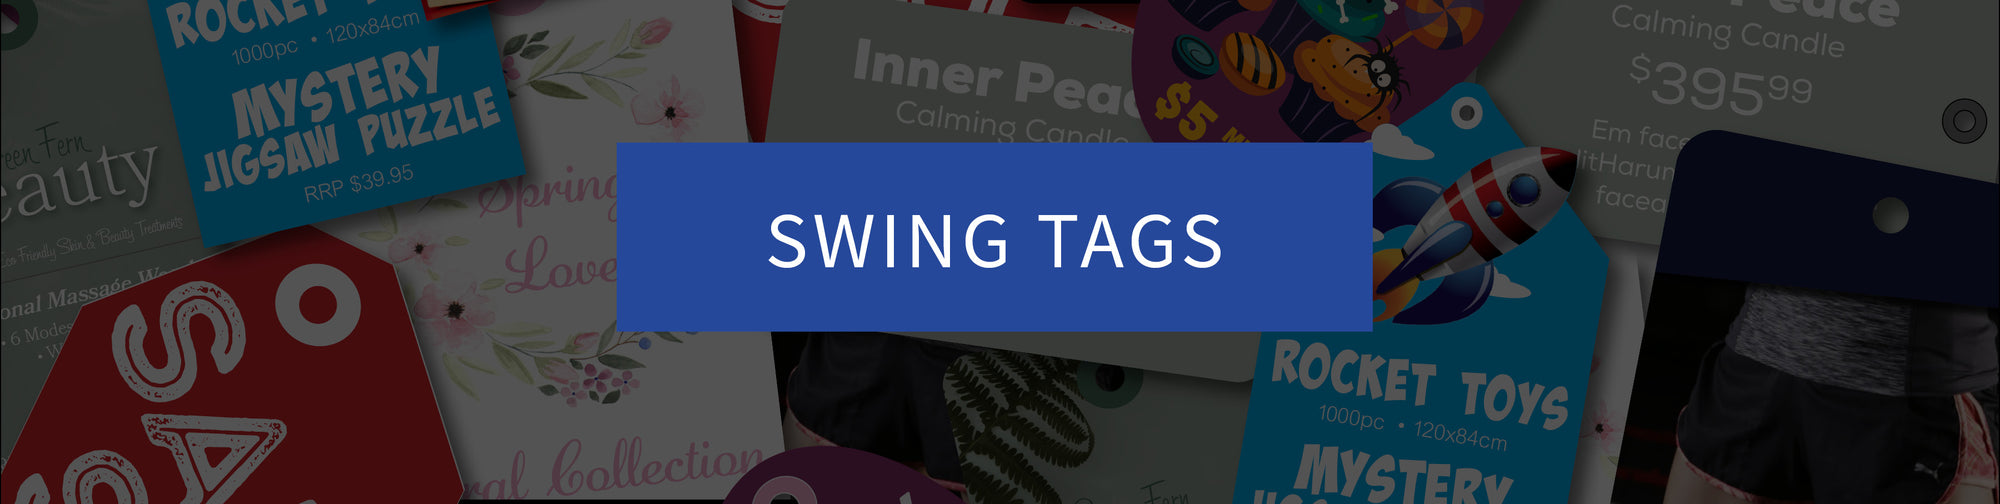 Swing tags